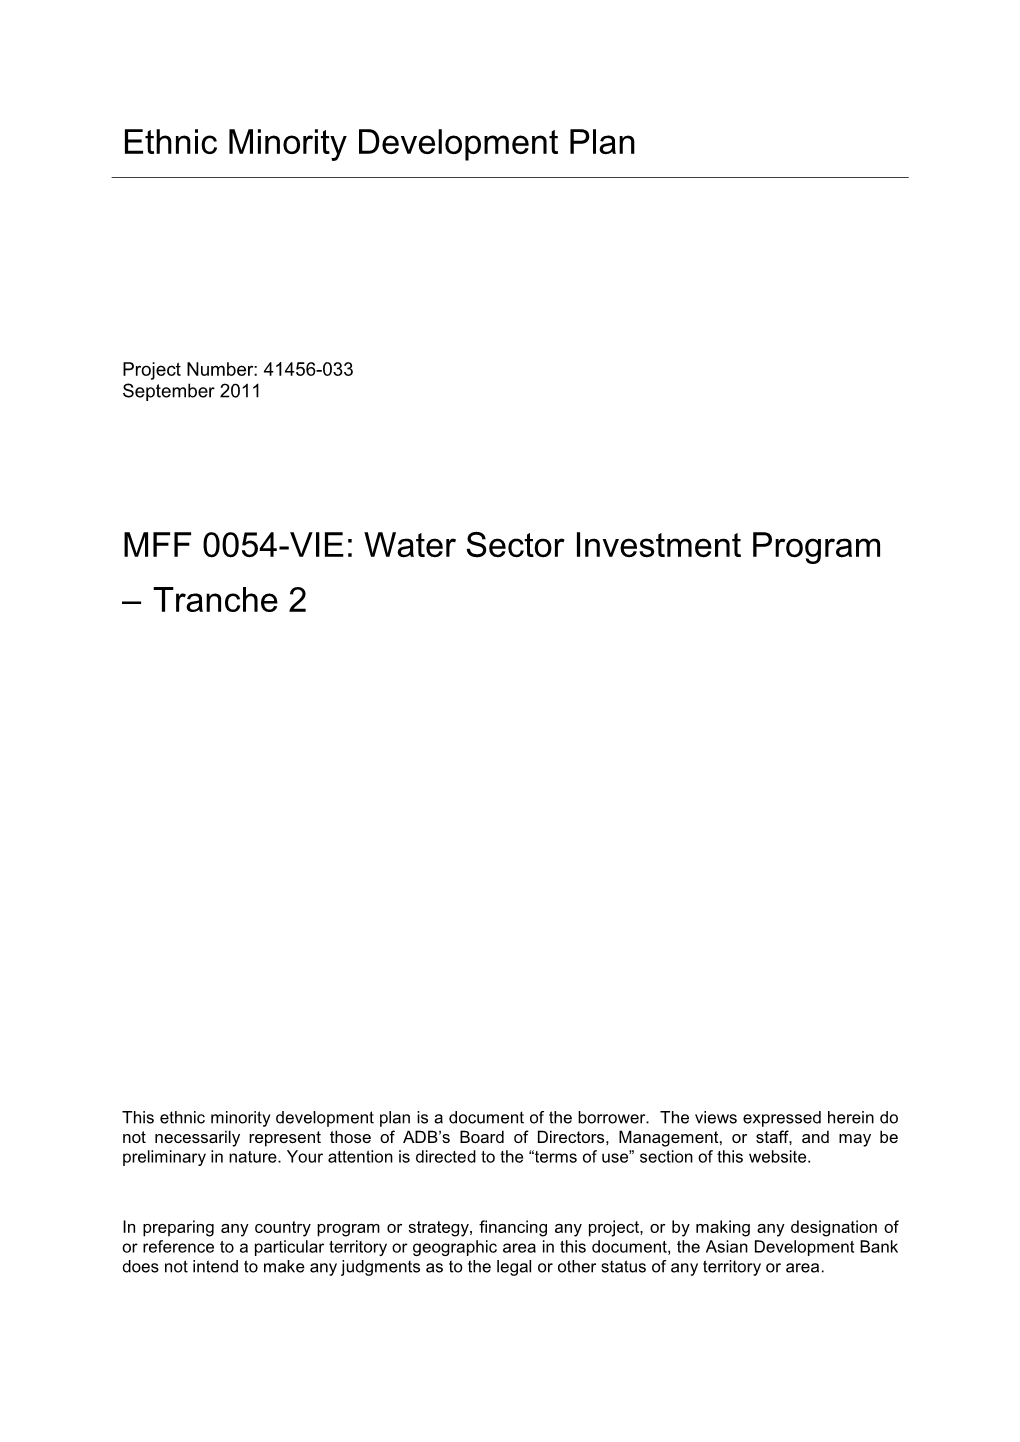 EMDP: Viet Nam: Water Sector Investment Program